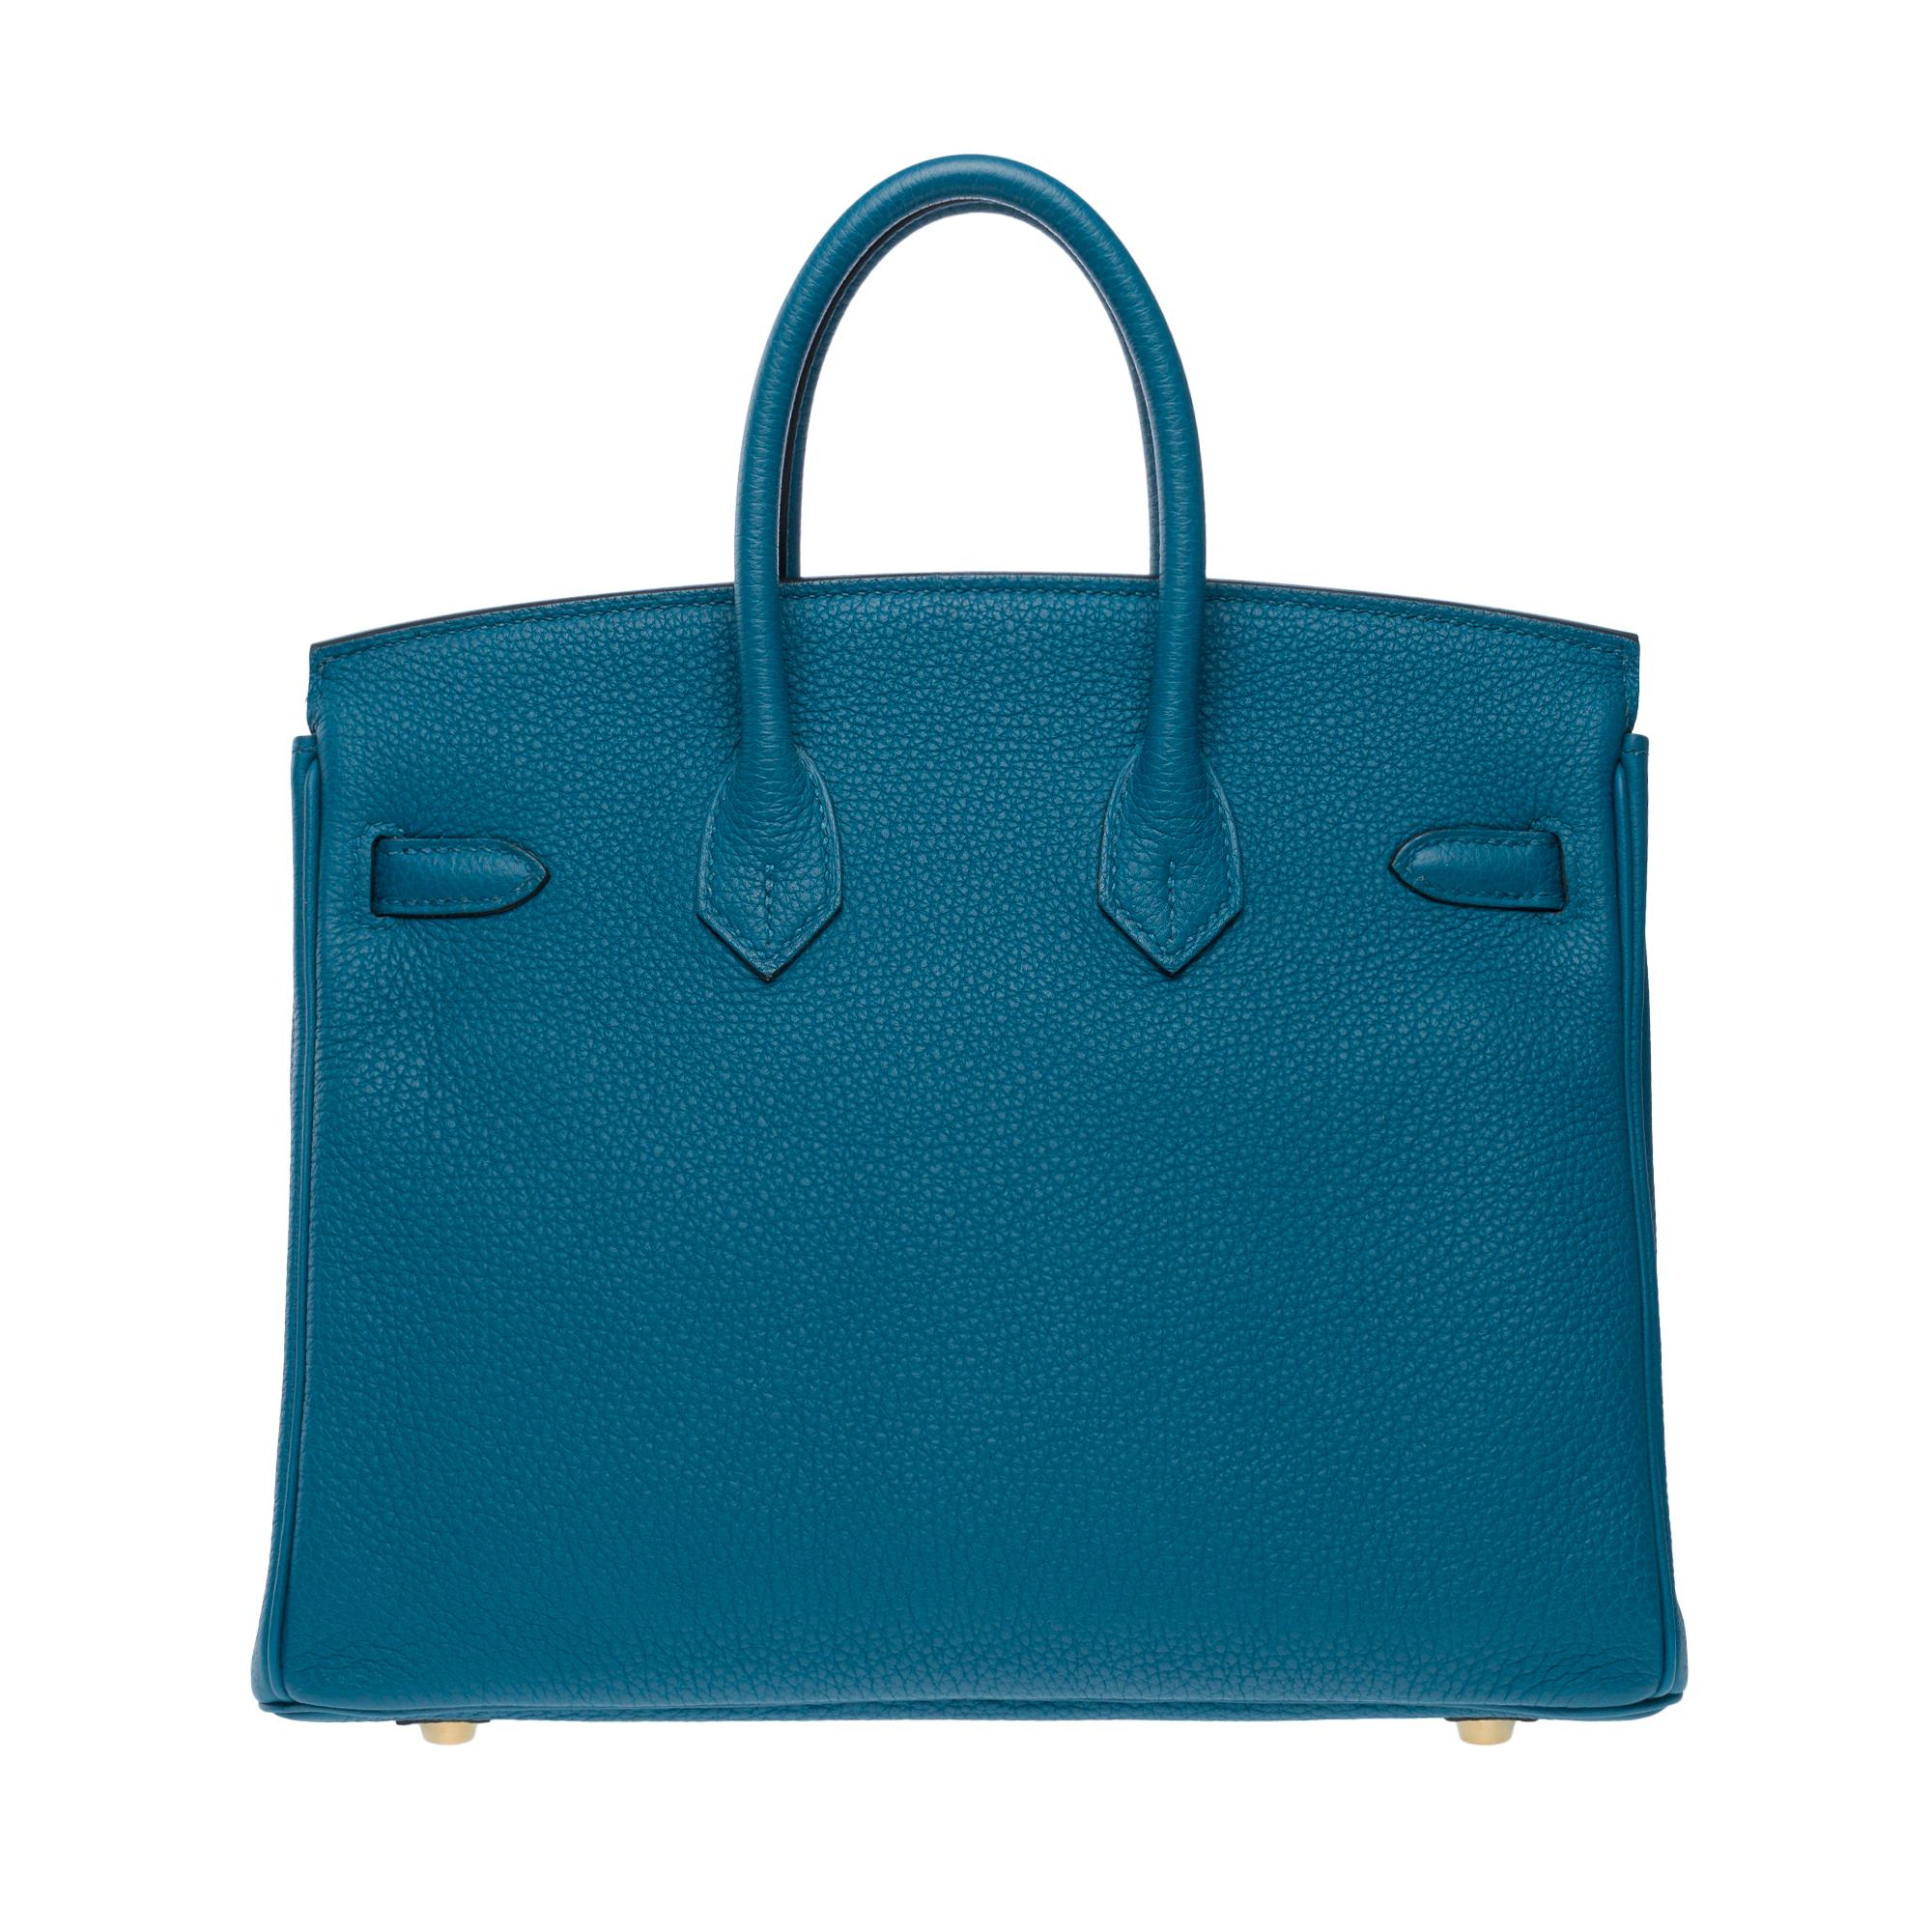 Magnifique sac à main Birkin 25 cm en cuir bleu cobalt Togo, GHW en vente 1